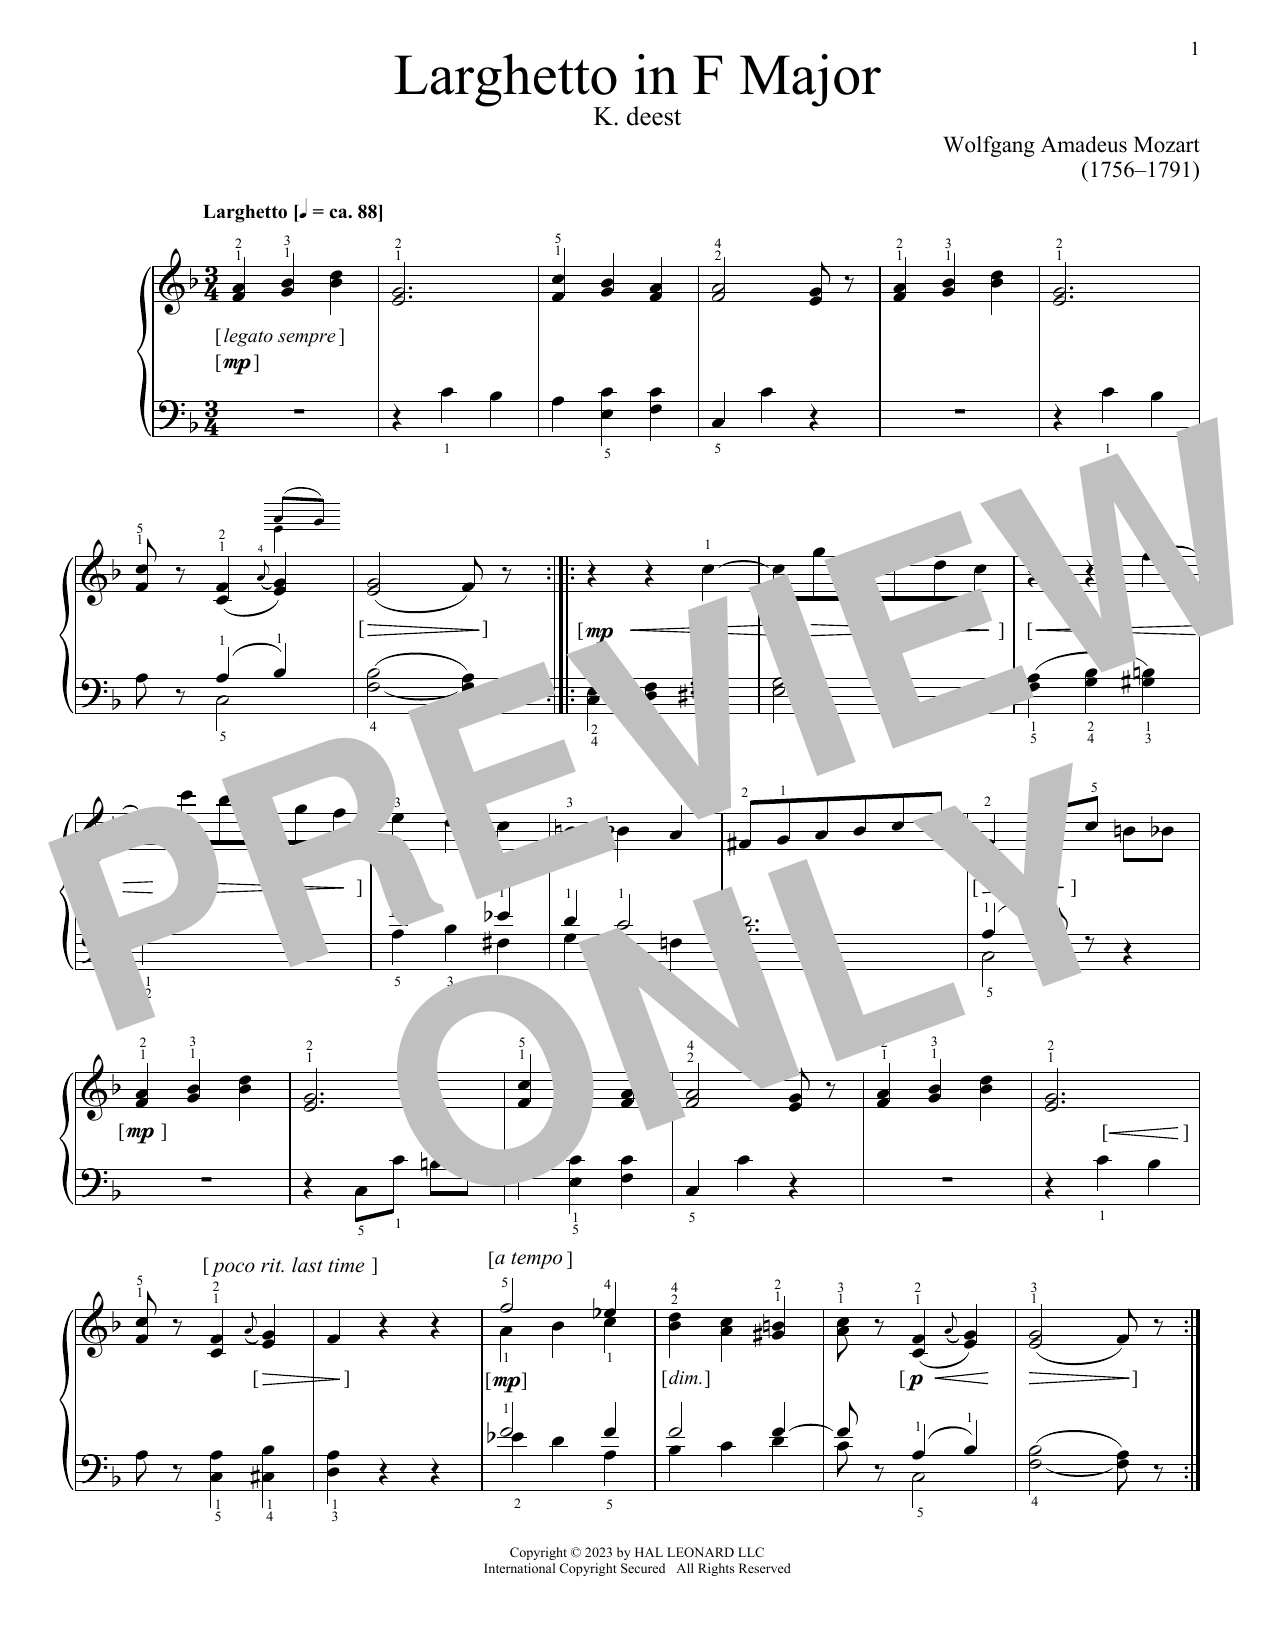 Download Wolfgang Amadeus Mozart Larghetto in F Major, K. deest Sheet Music